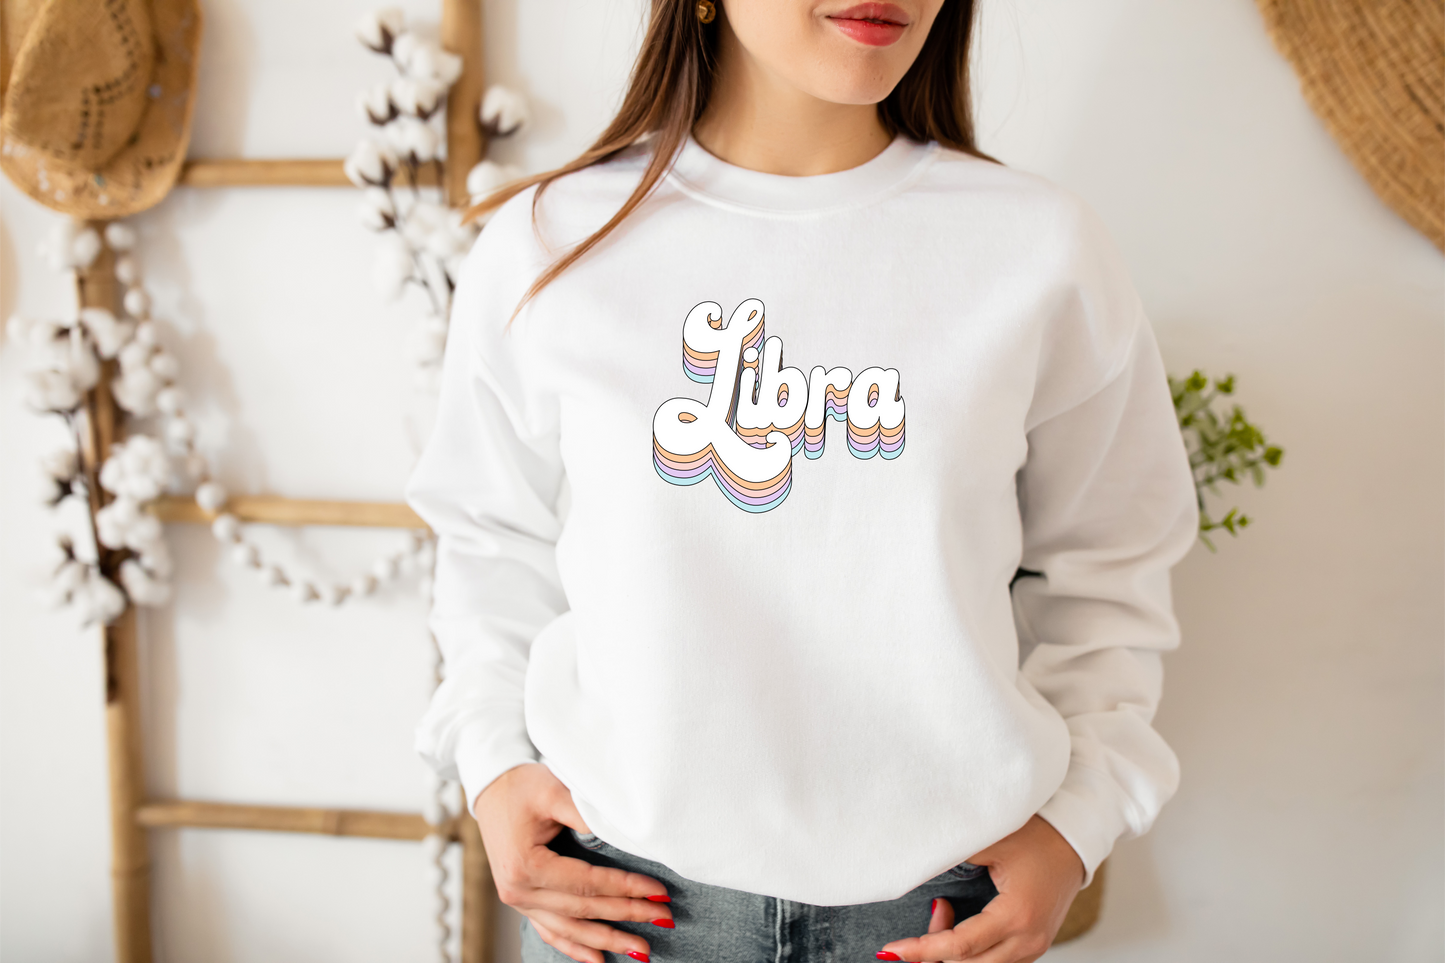 Libra Astrology Crewneck Sweatshirt